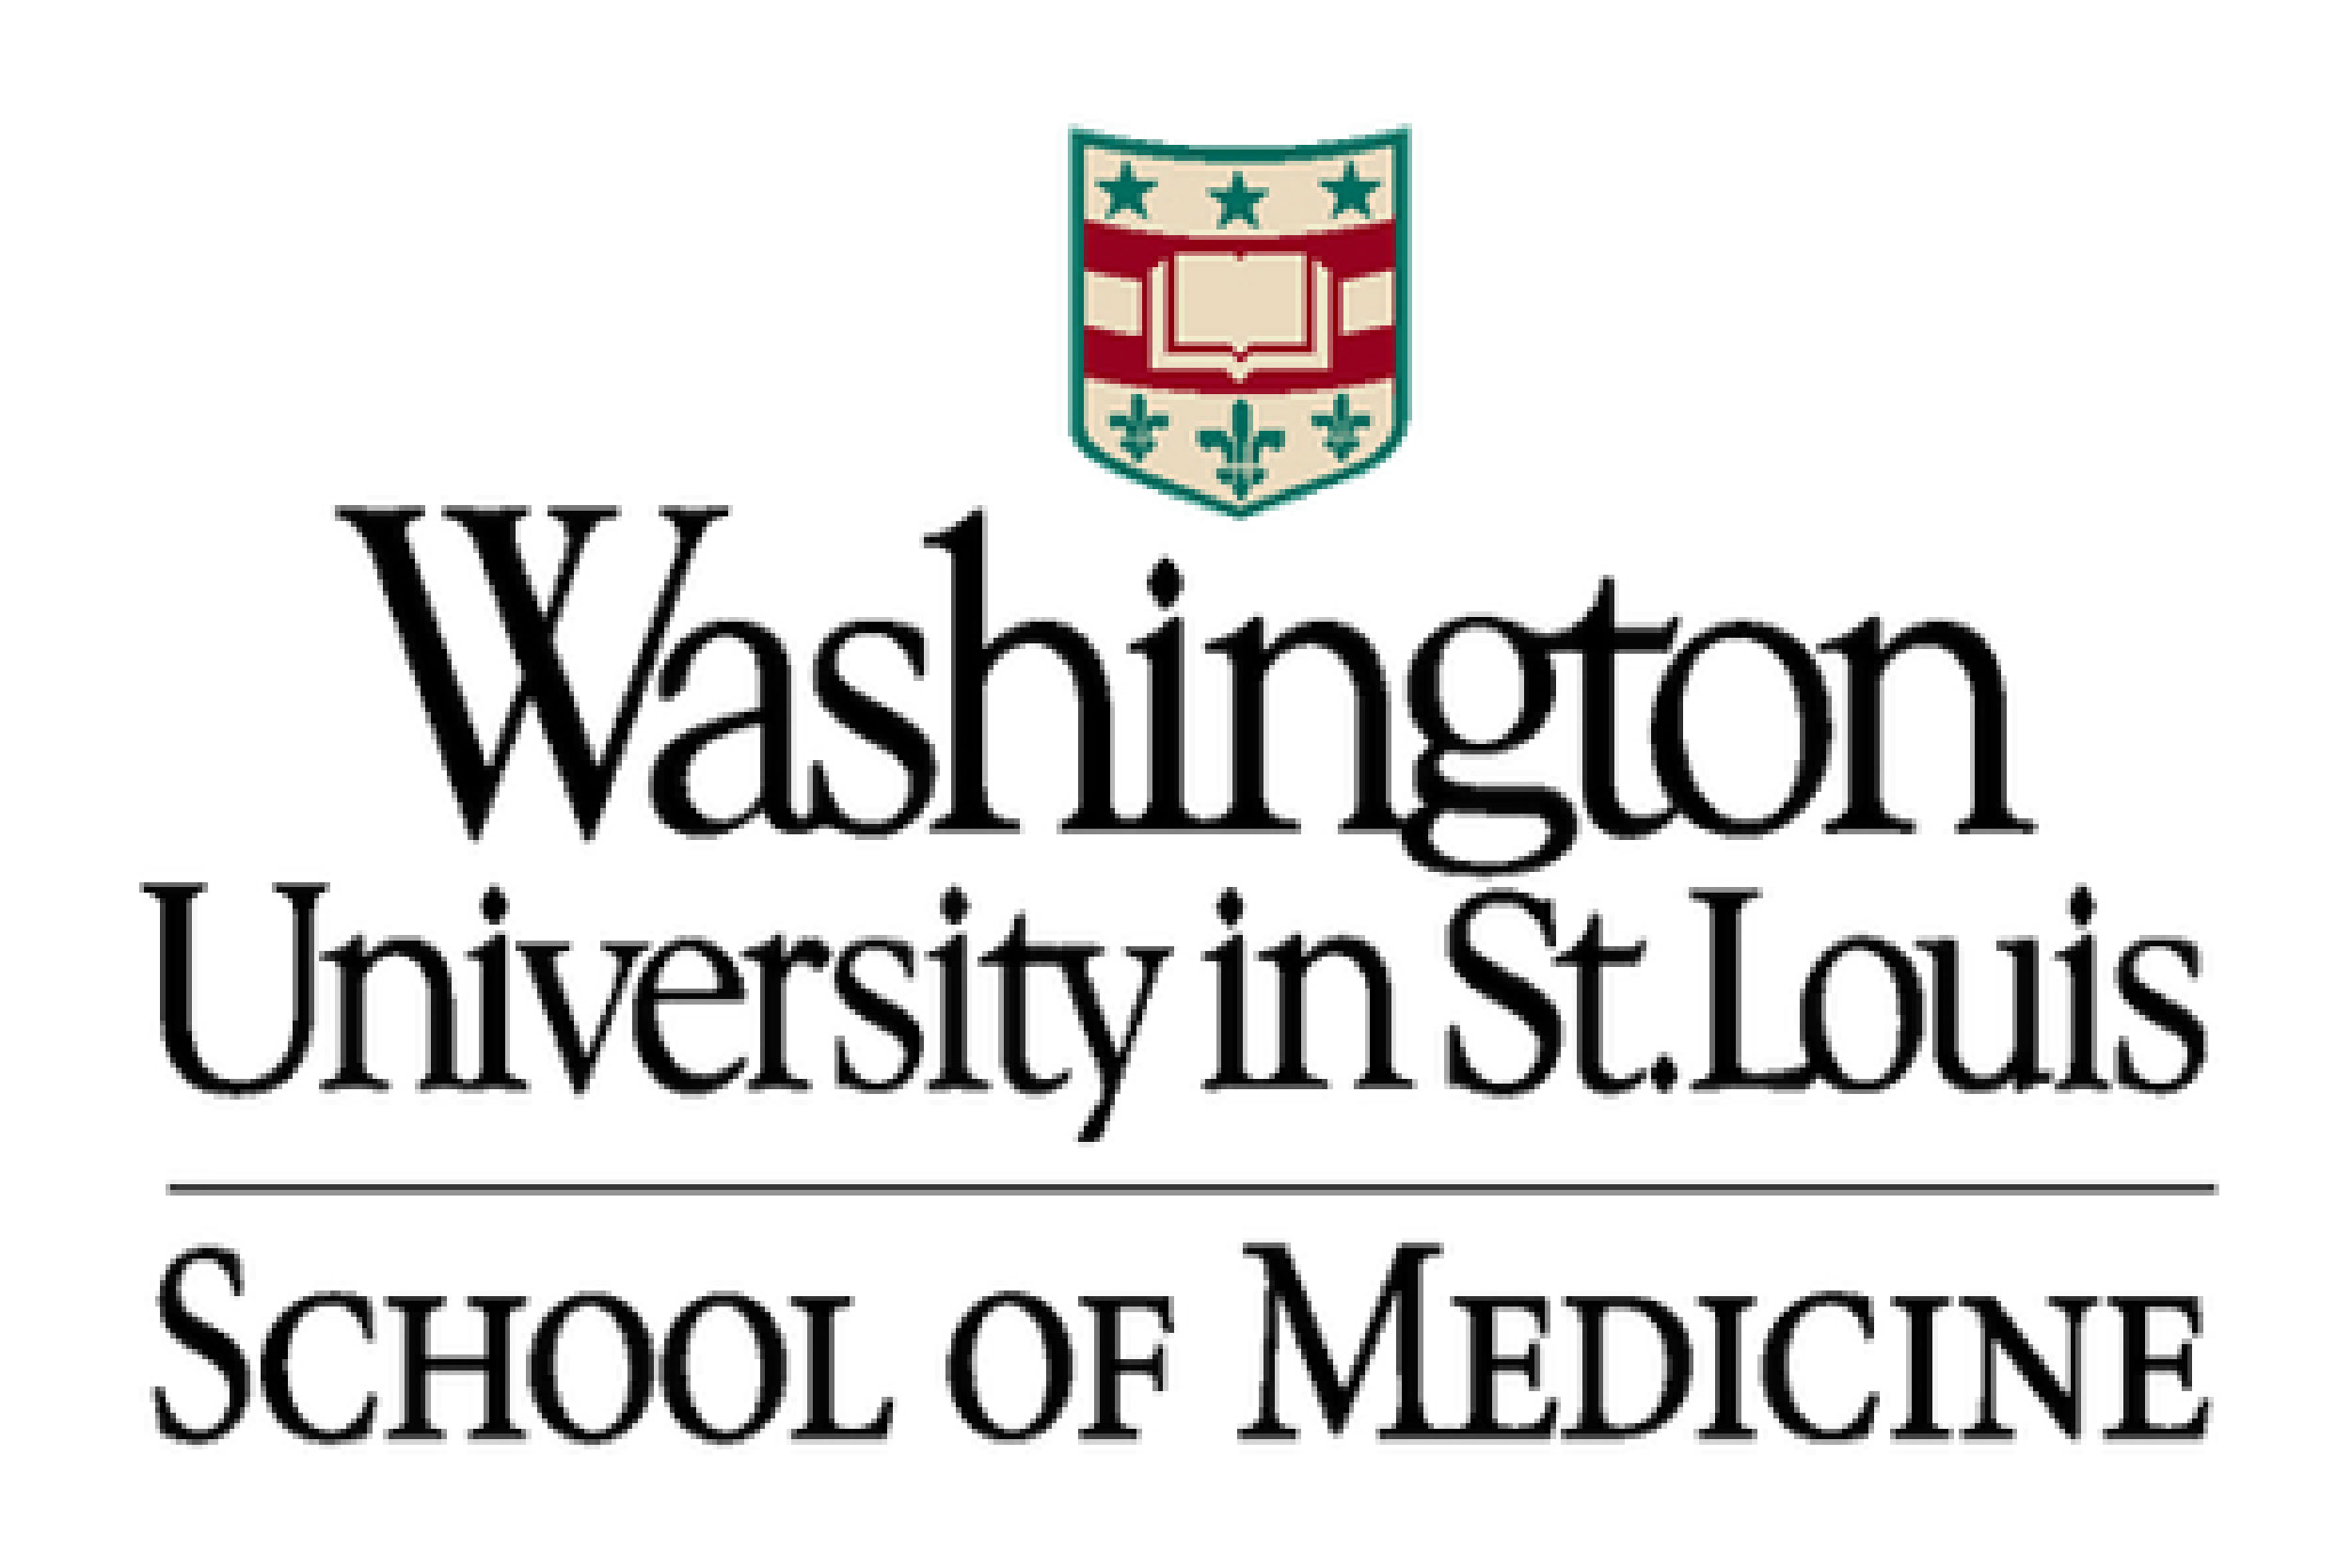 Washington University School of Medicine logo